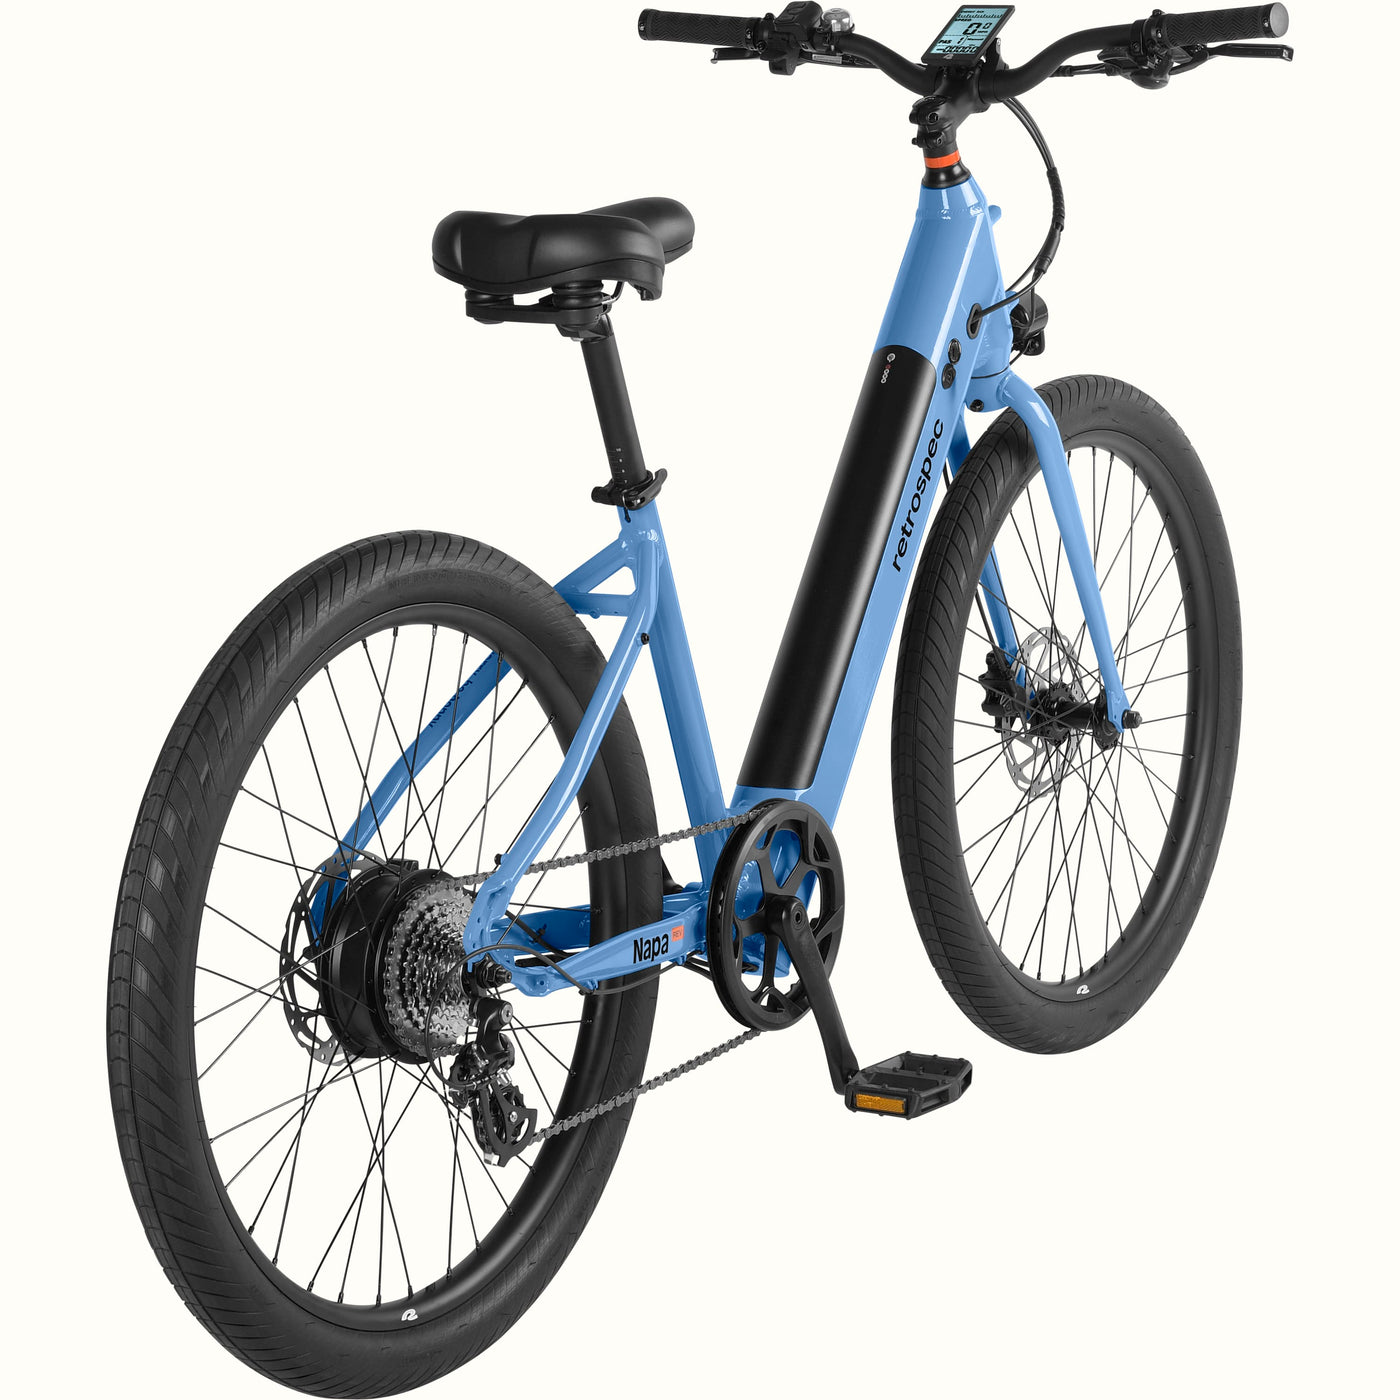 Napa Rev Hybrid/Fitness Electric Bike - Step Through | Bluebell